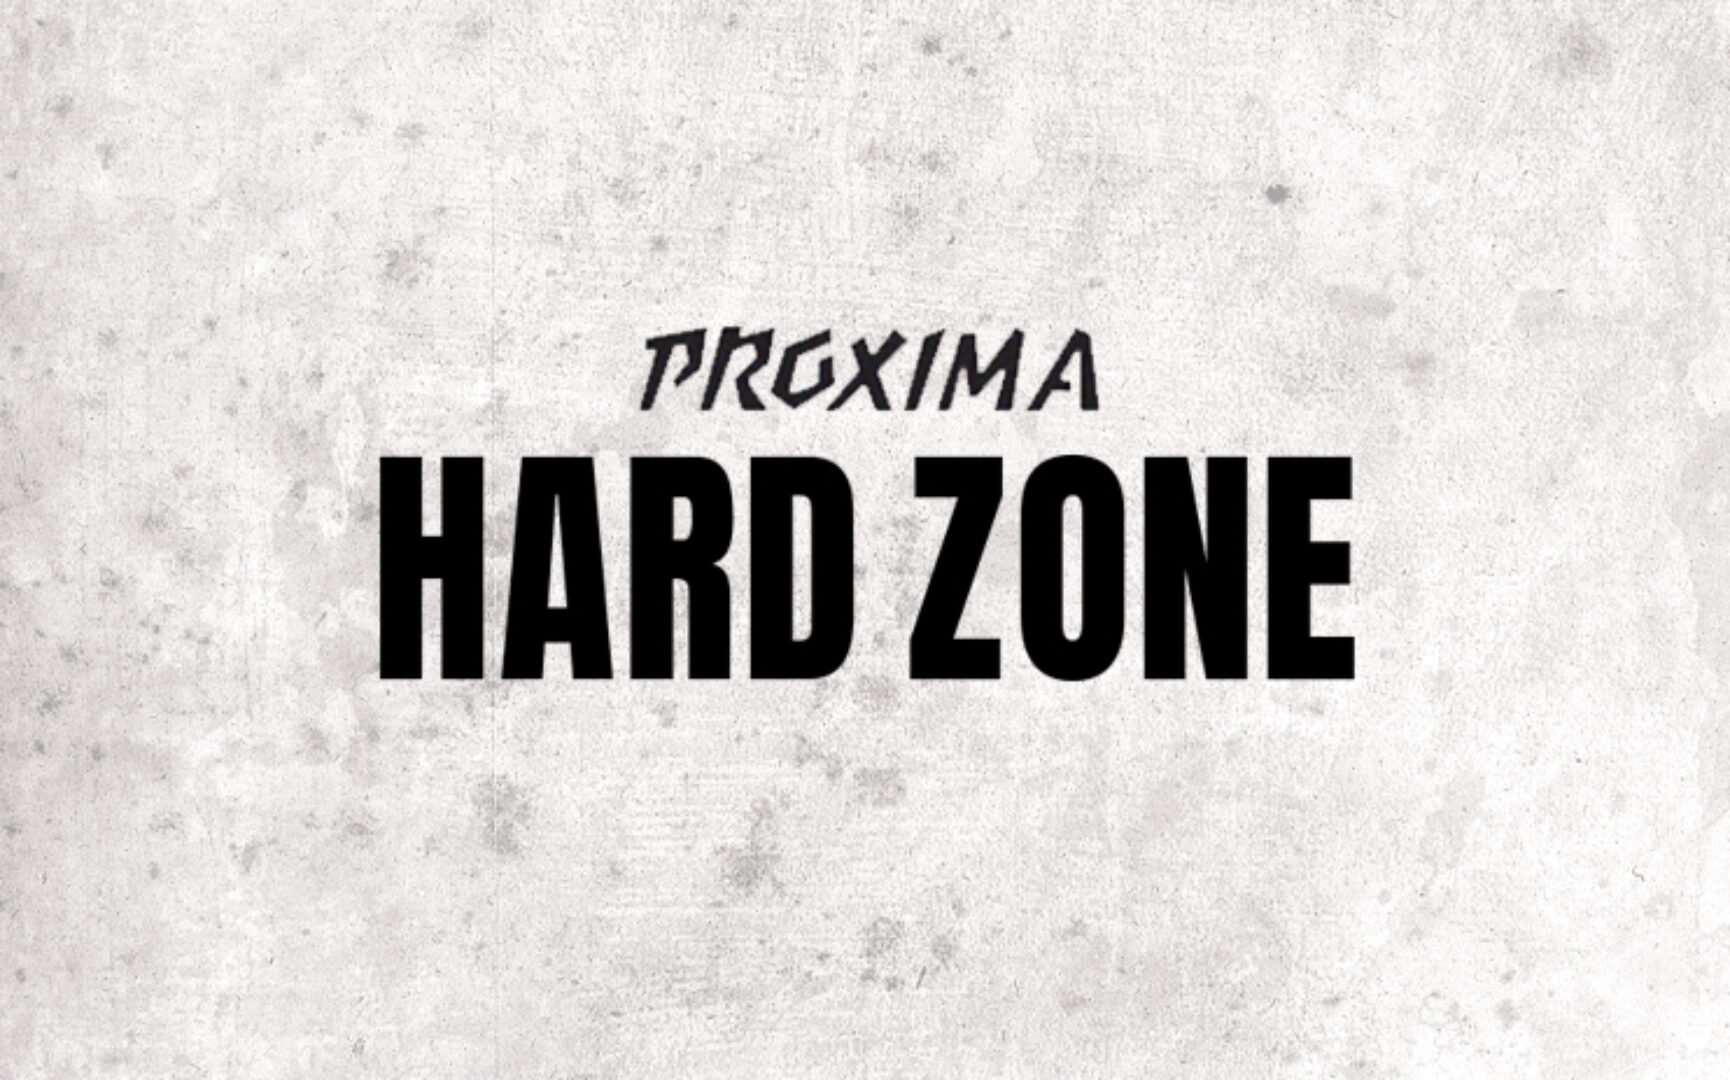 Hard zone